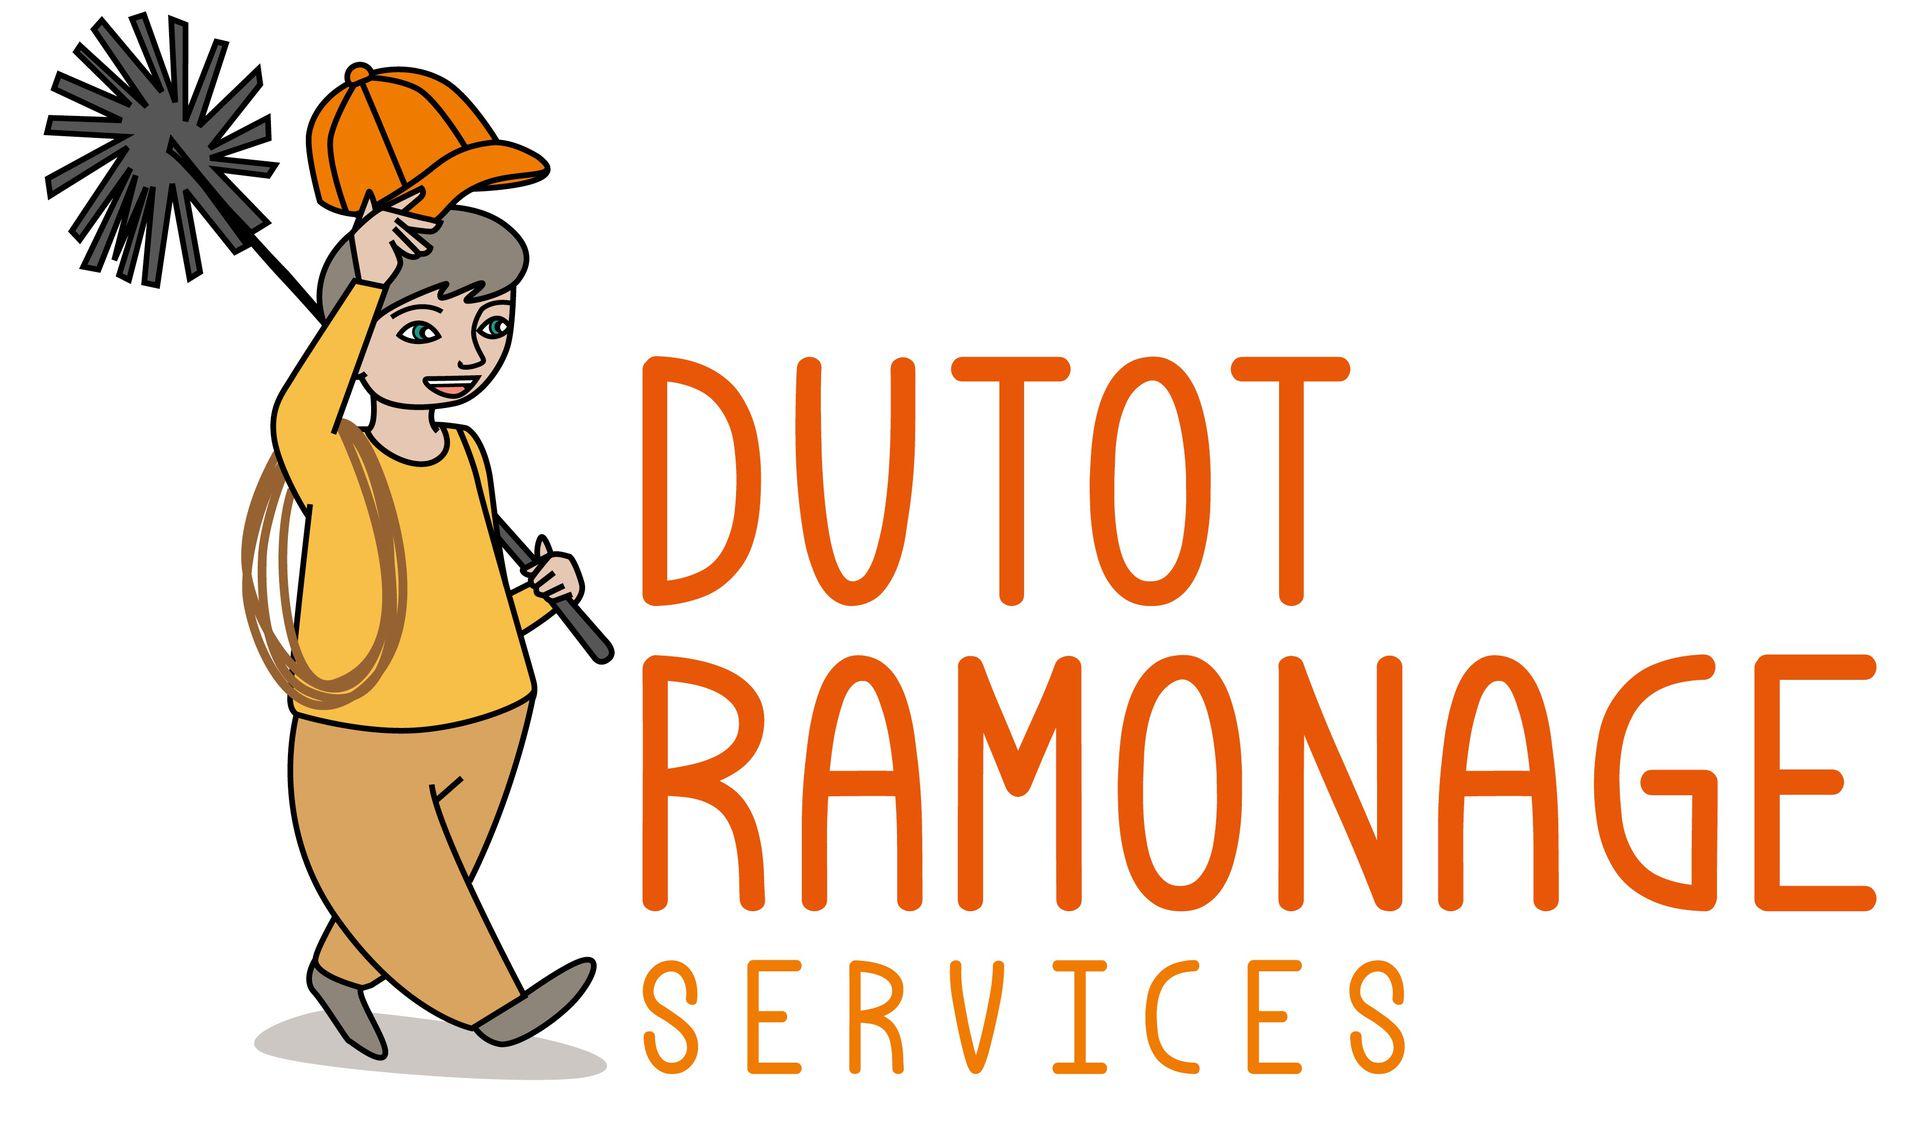 Dutot Ramonage Services Goderville